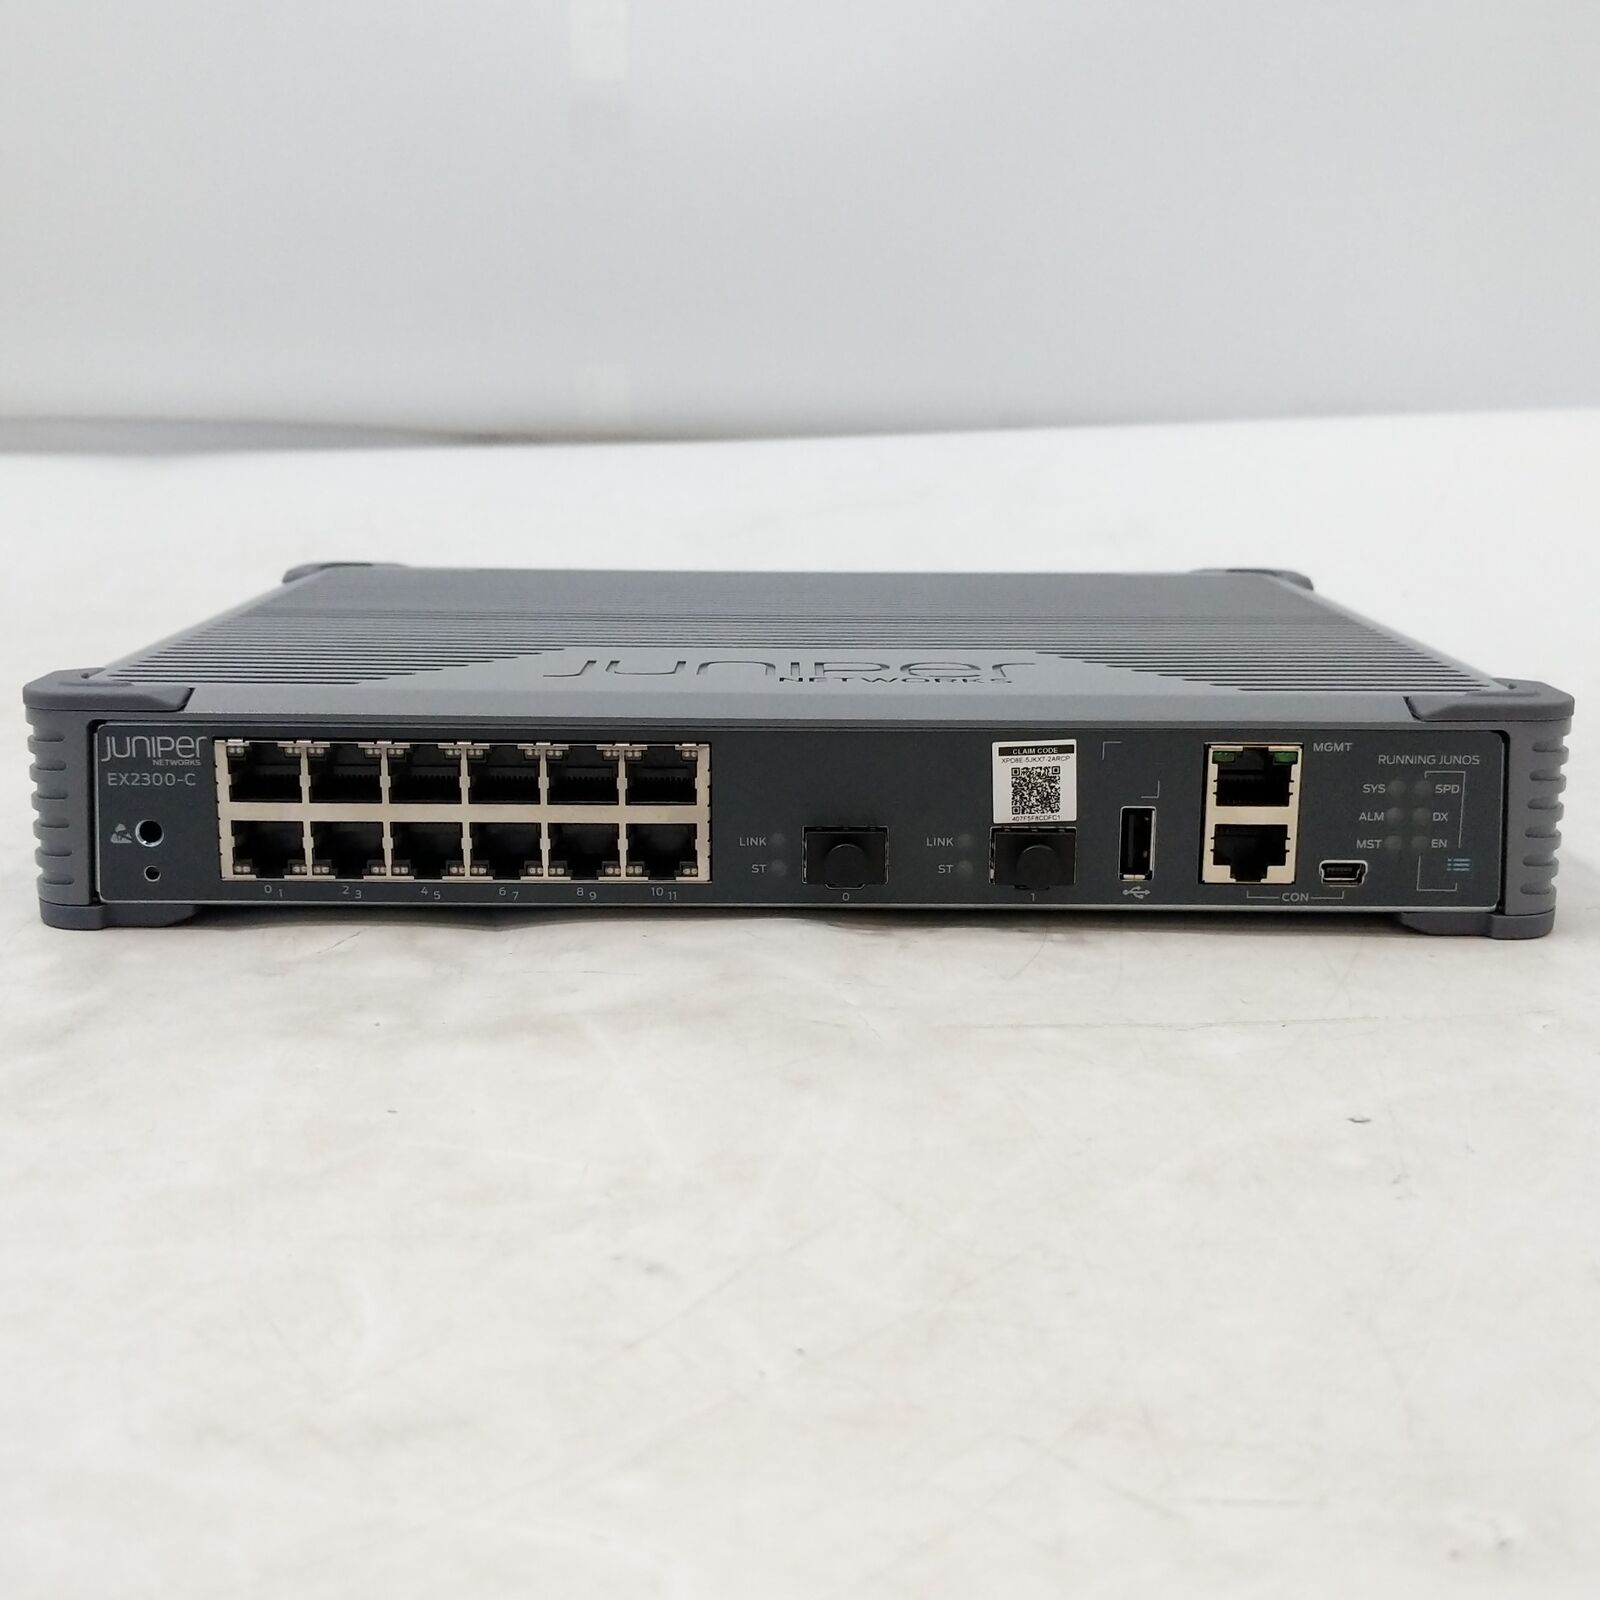 Juniper Networks EX2300-C-12T 12-Port Ethernet Switch